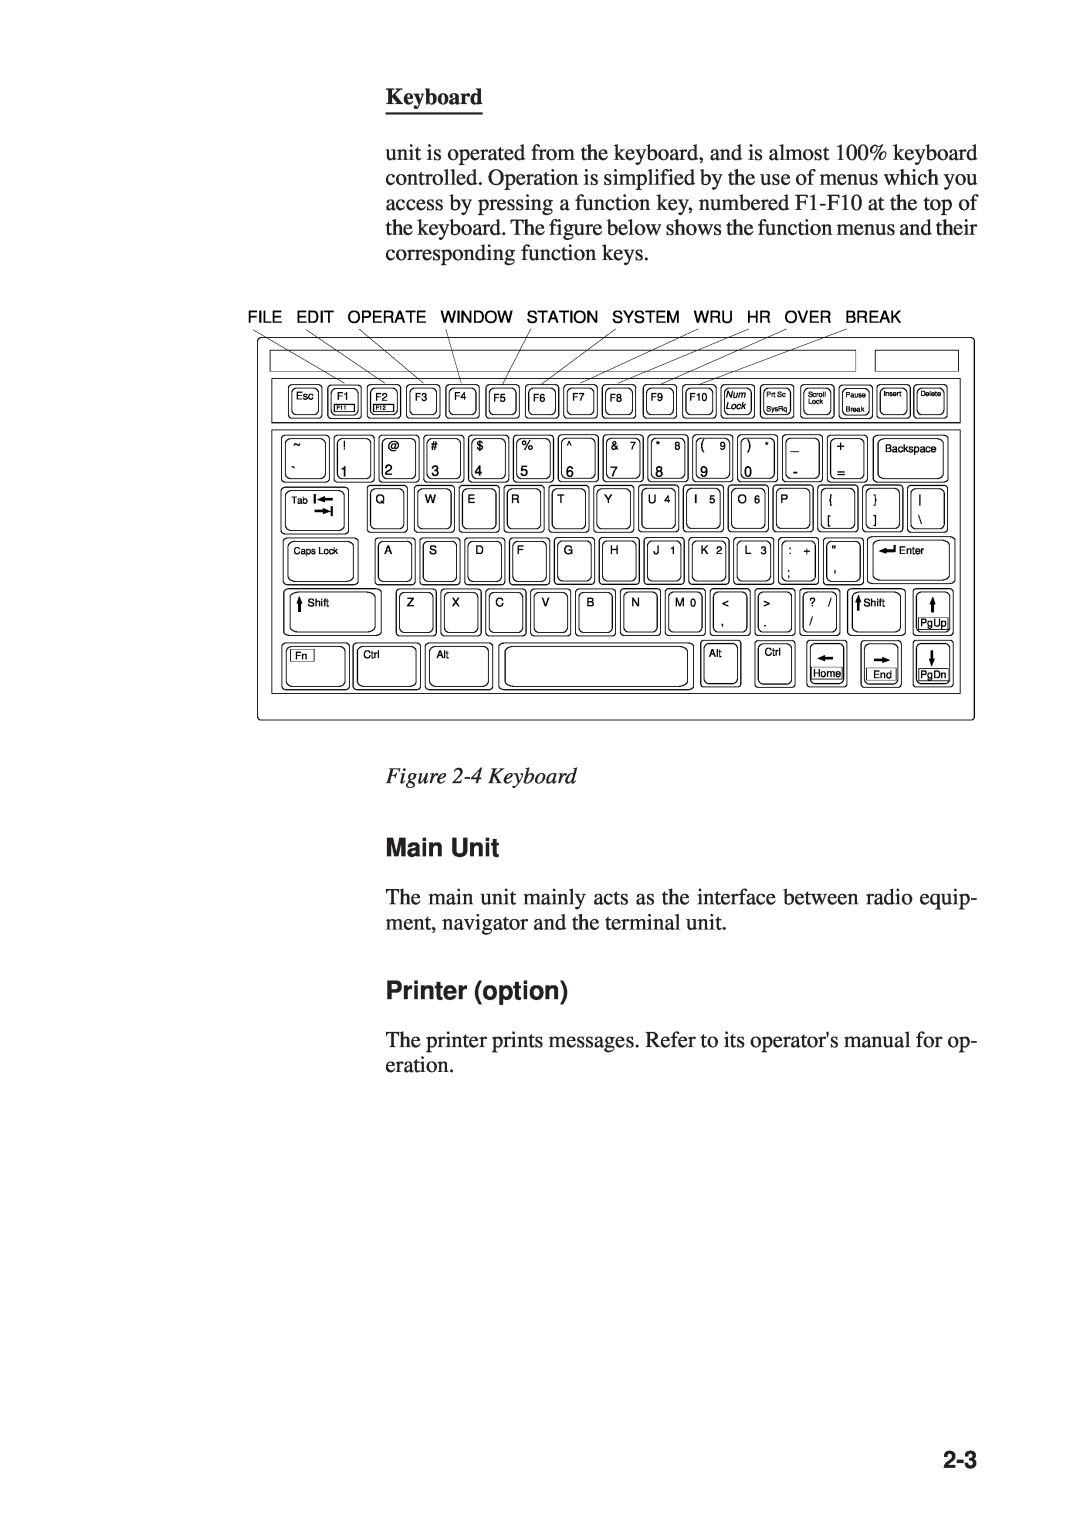 Furuno RC-1500-1T manual Main Unit, Printer option, 4 Keyboard 